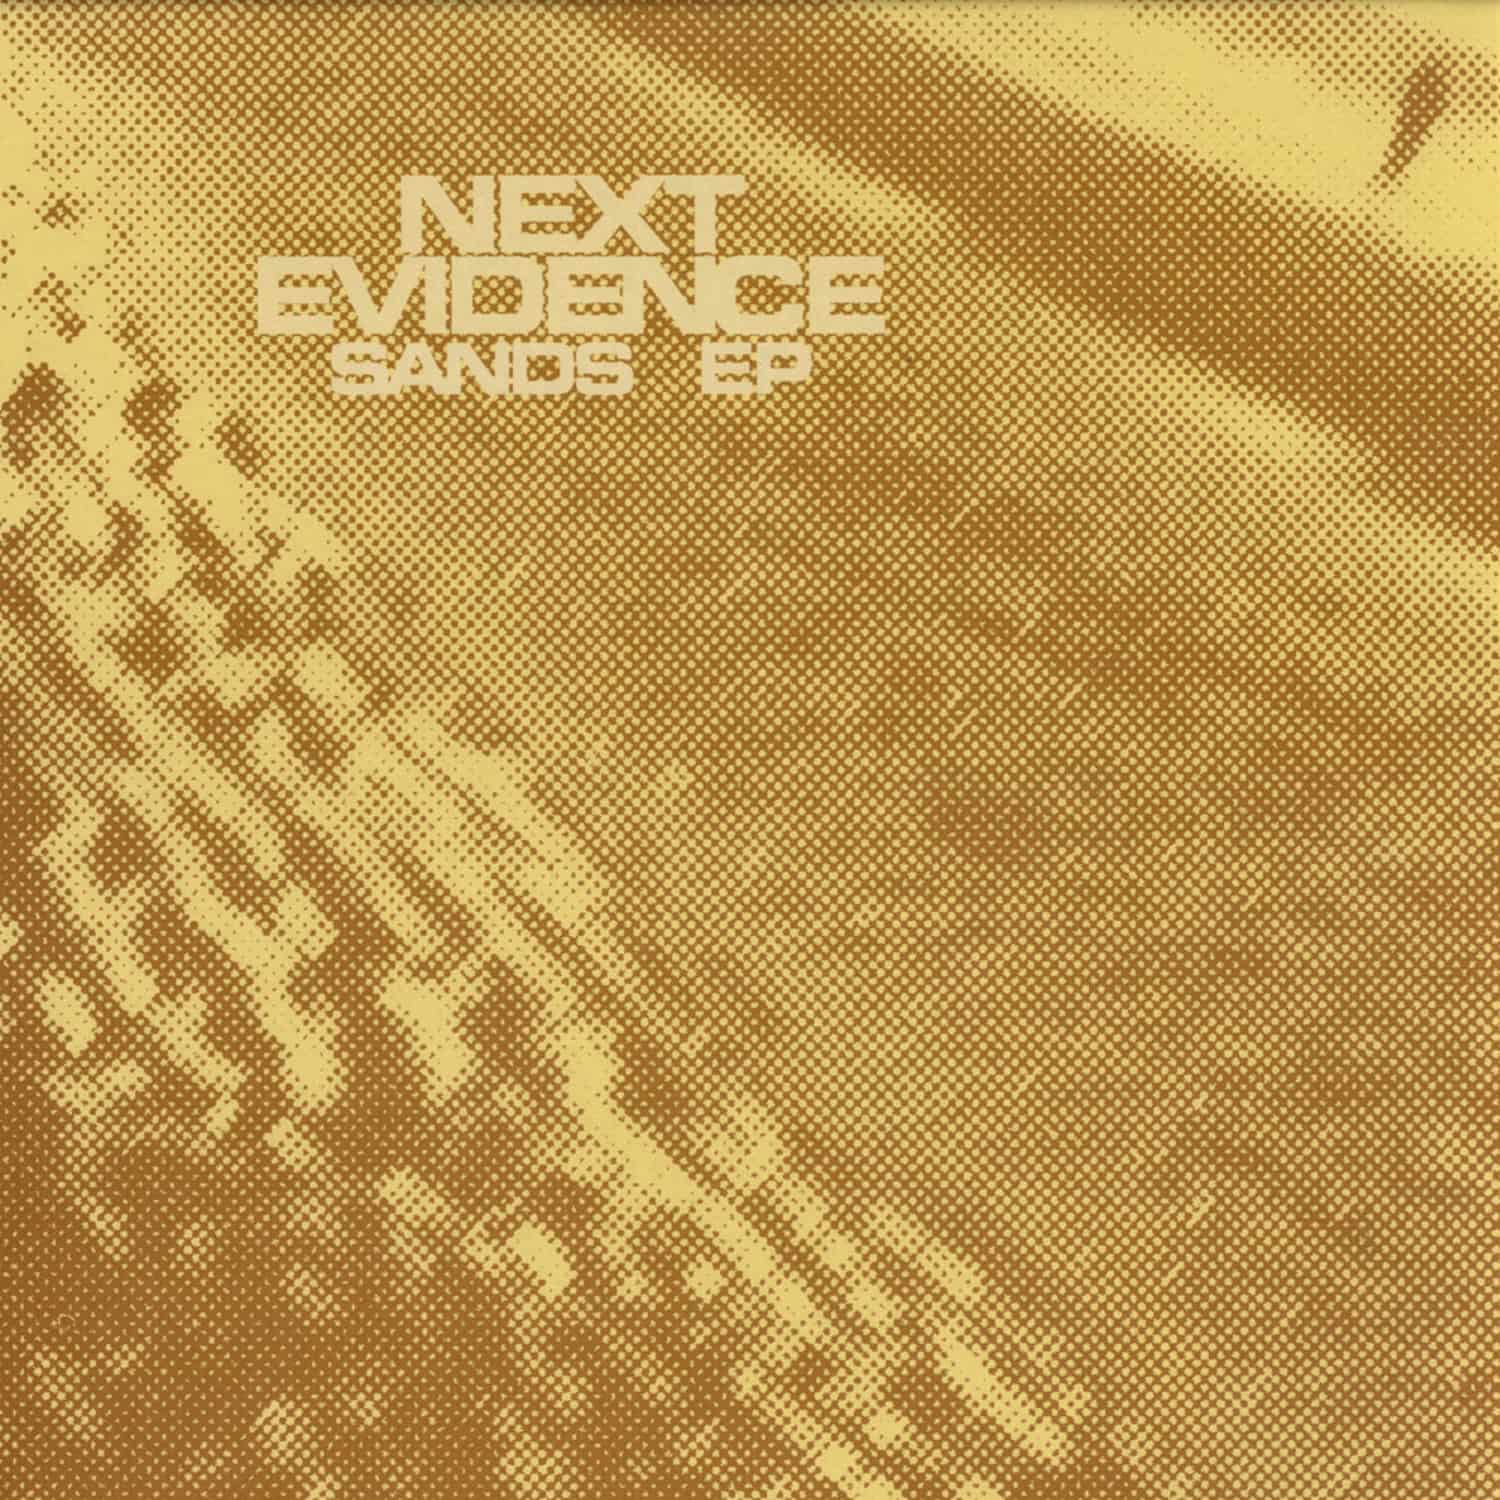 Next Evidence - SANDS EP